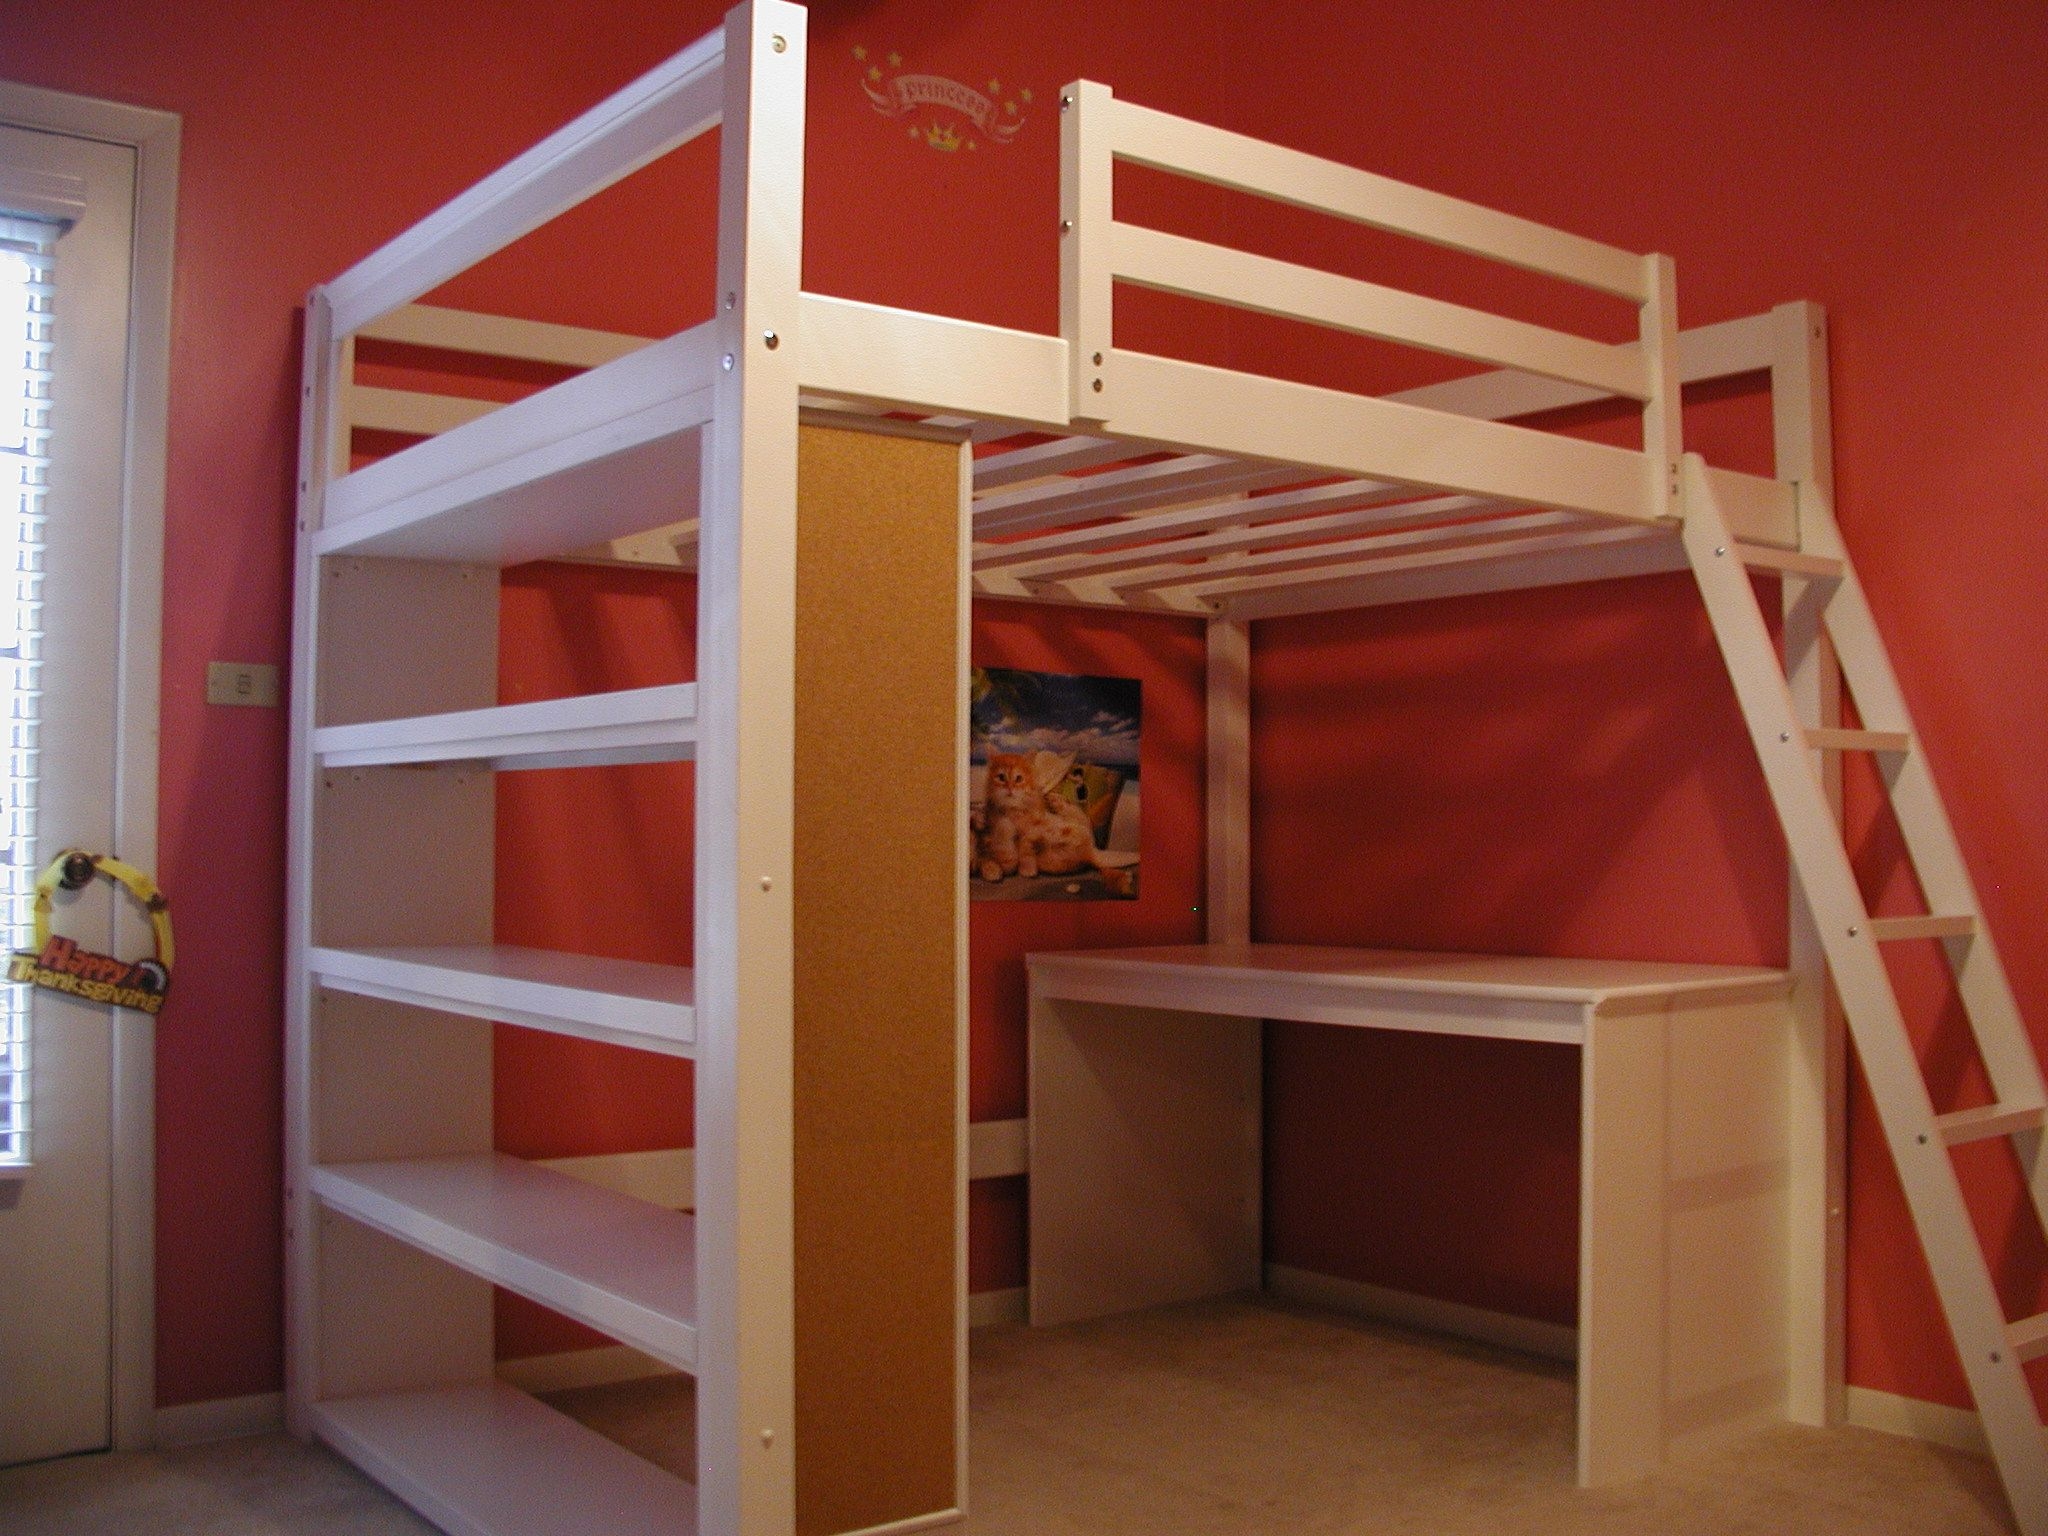 reinforced bunk beds